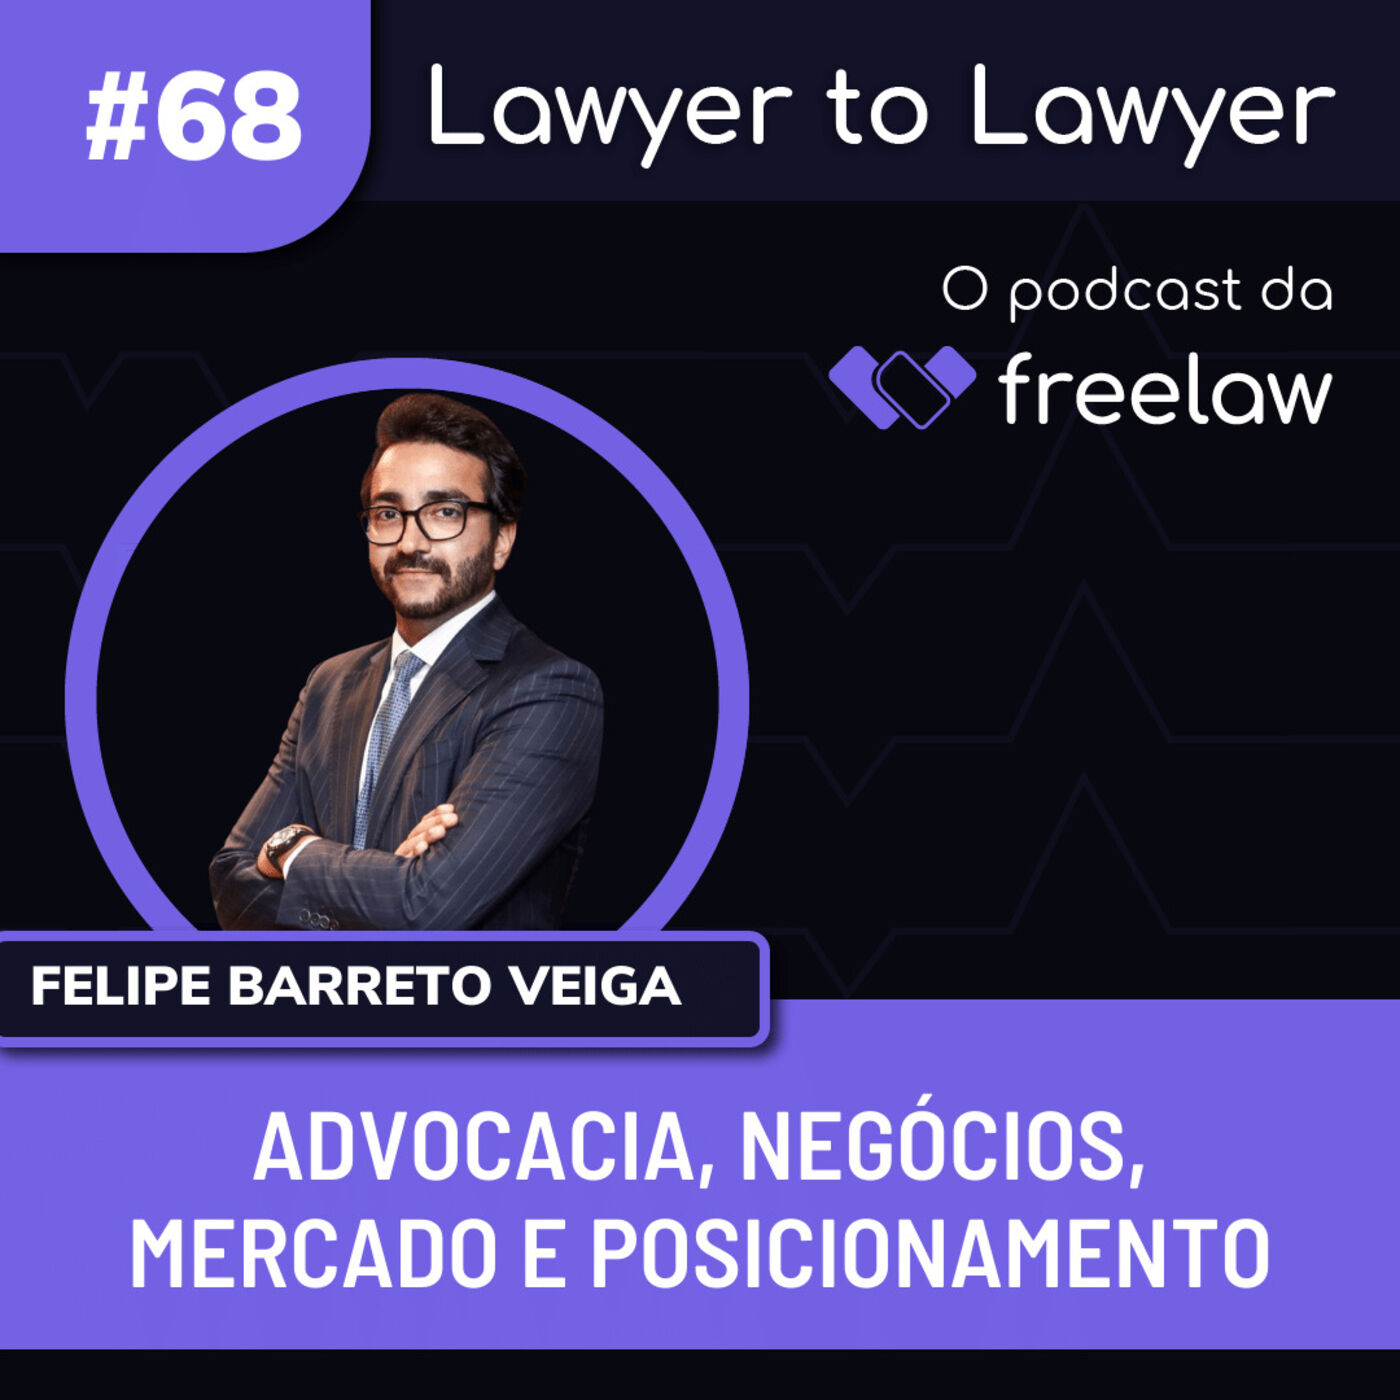 Artwork for podcast Lawyer to Lawyer, o podcast da Freelaw